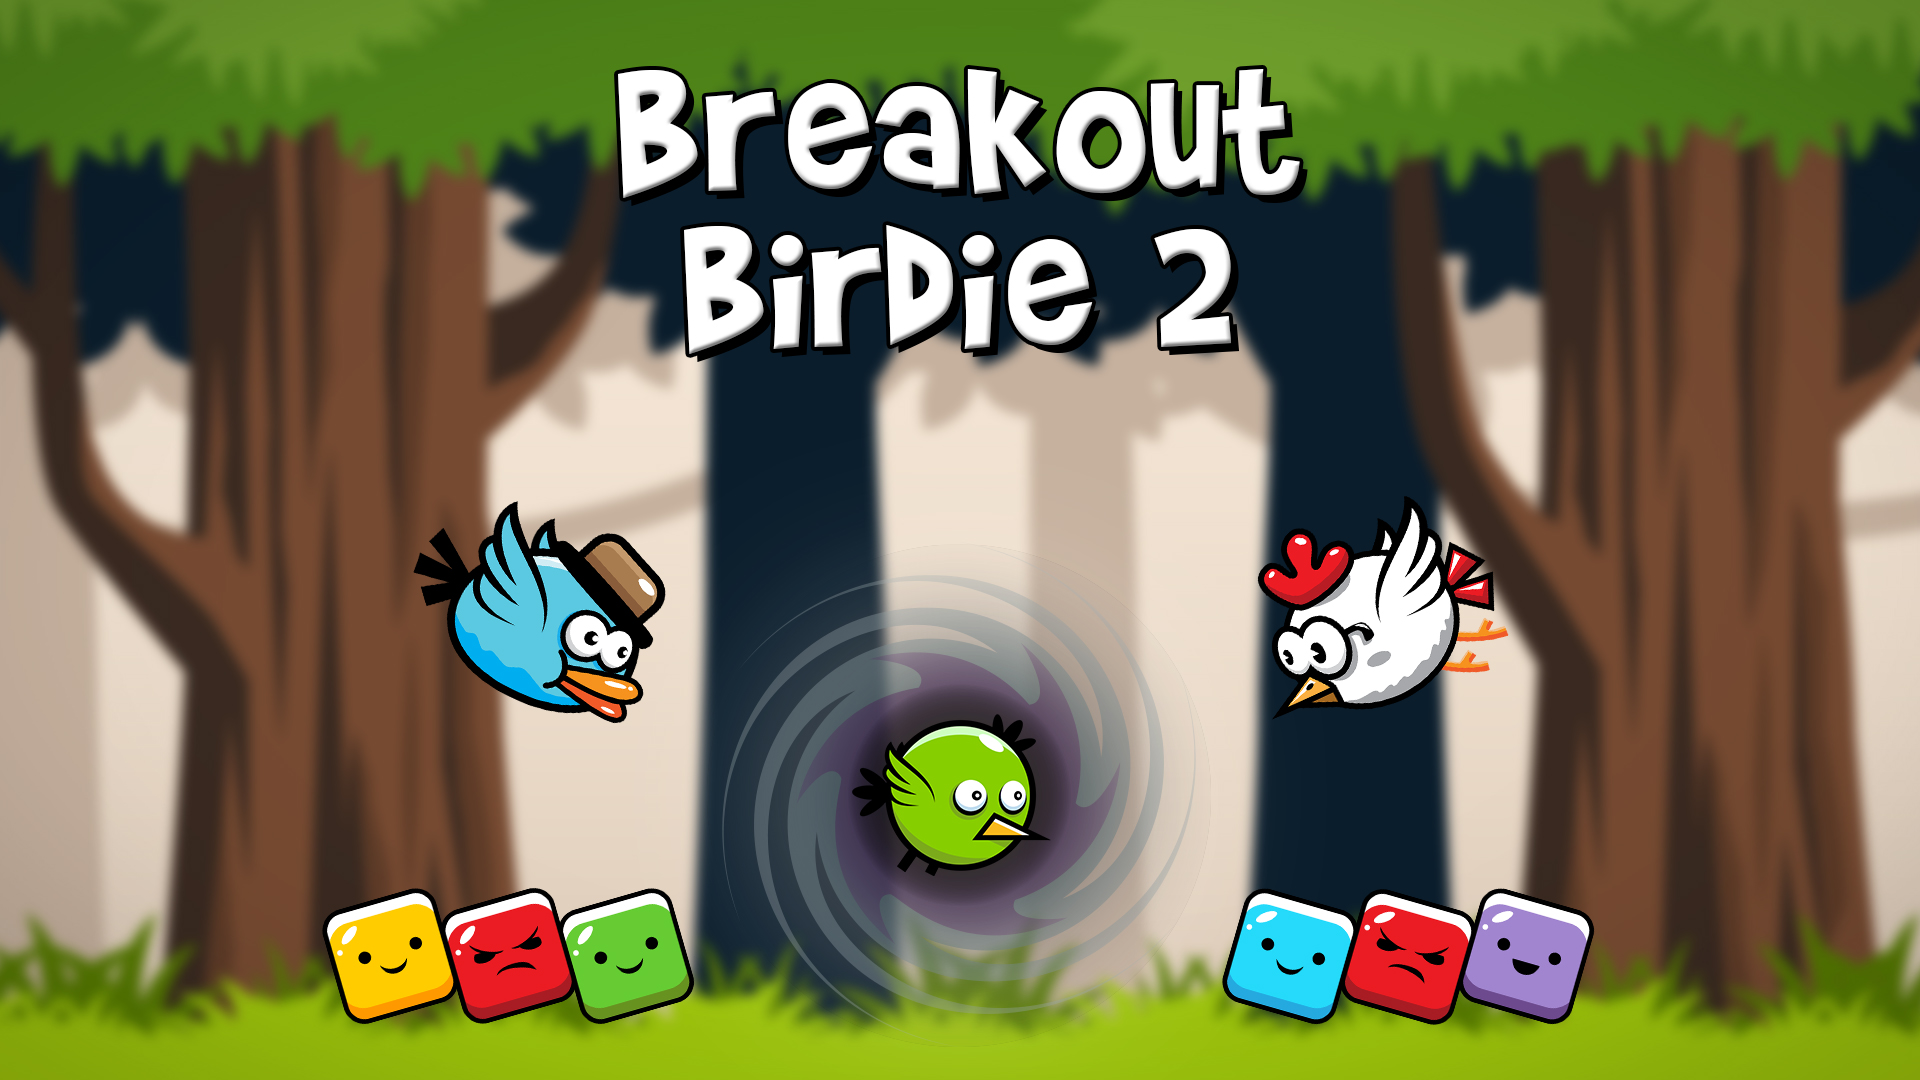 Breakout Birdie 2